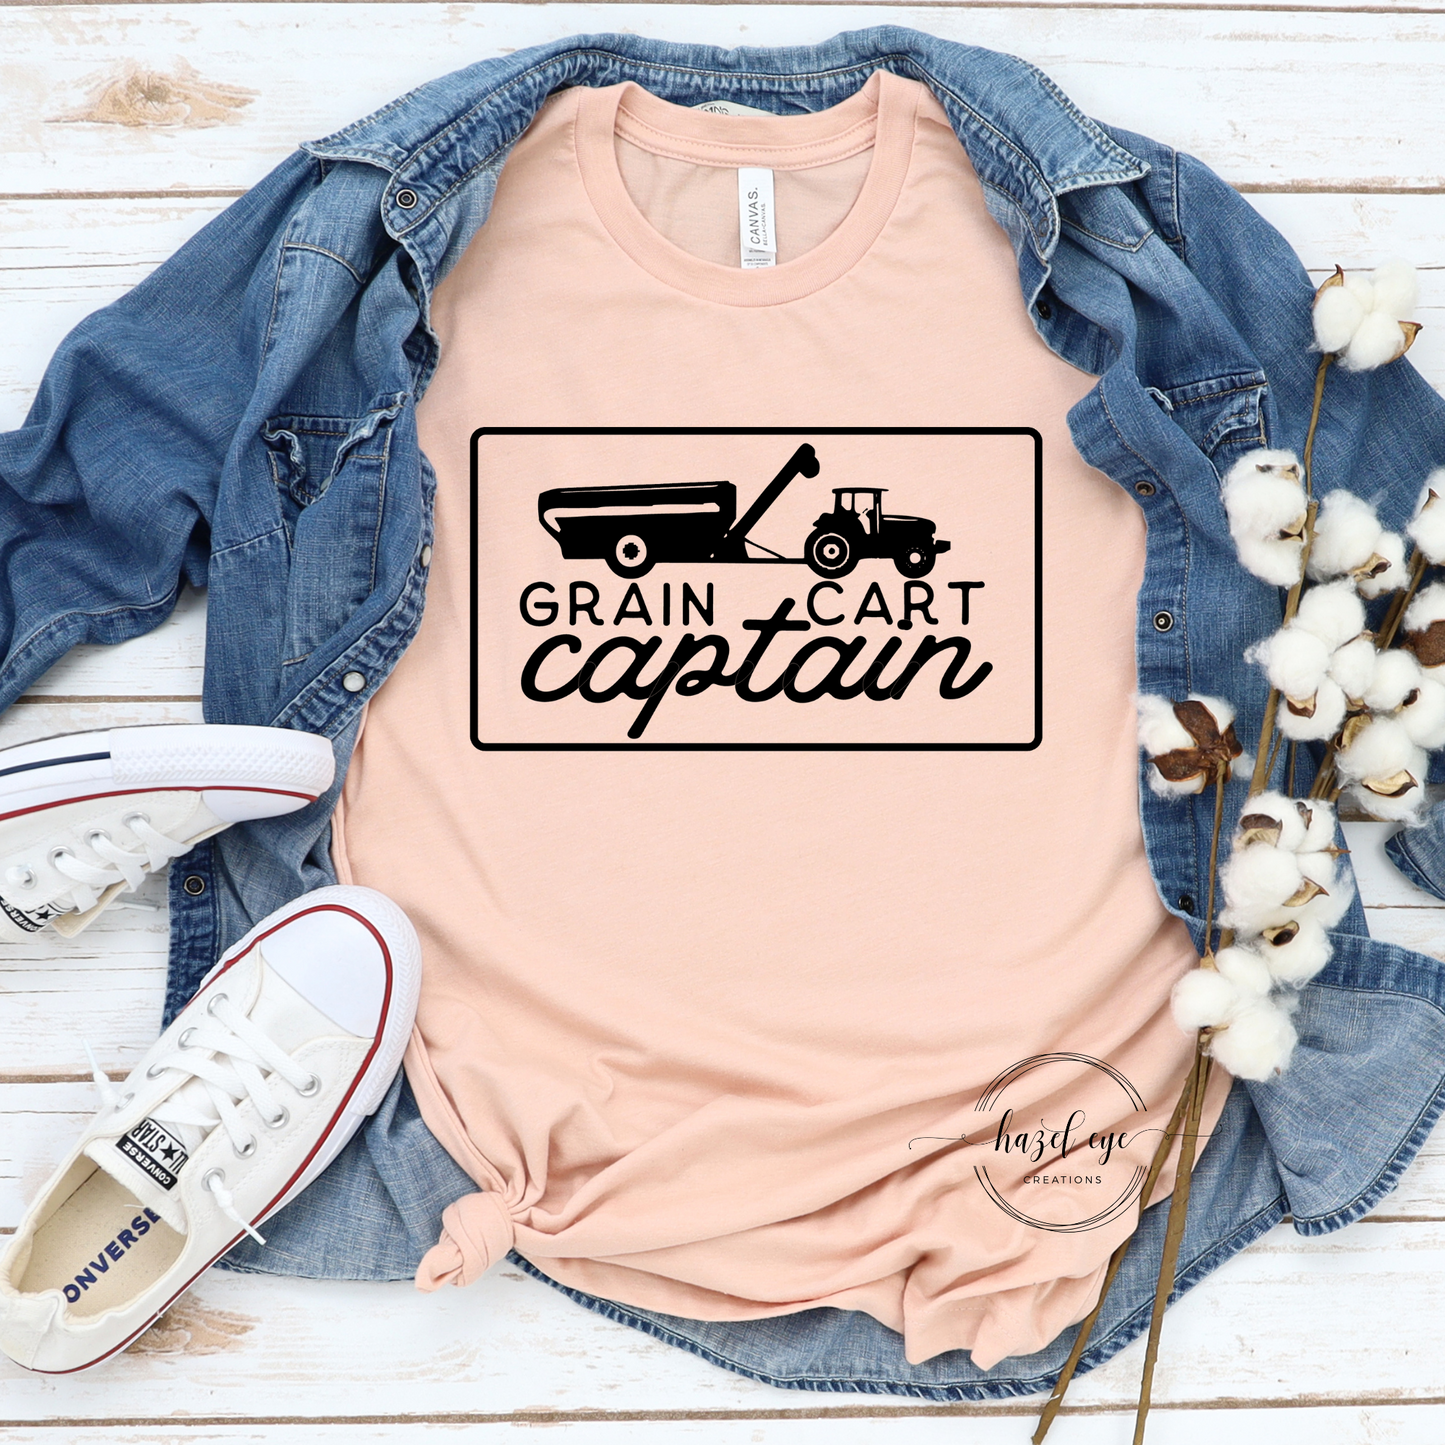 Grain cart captain